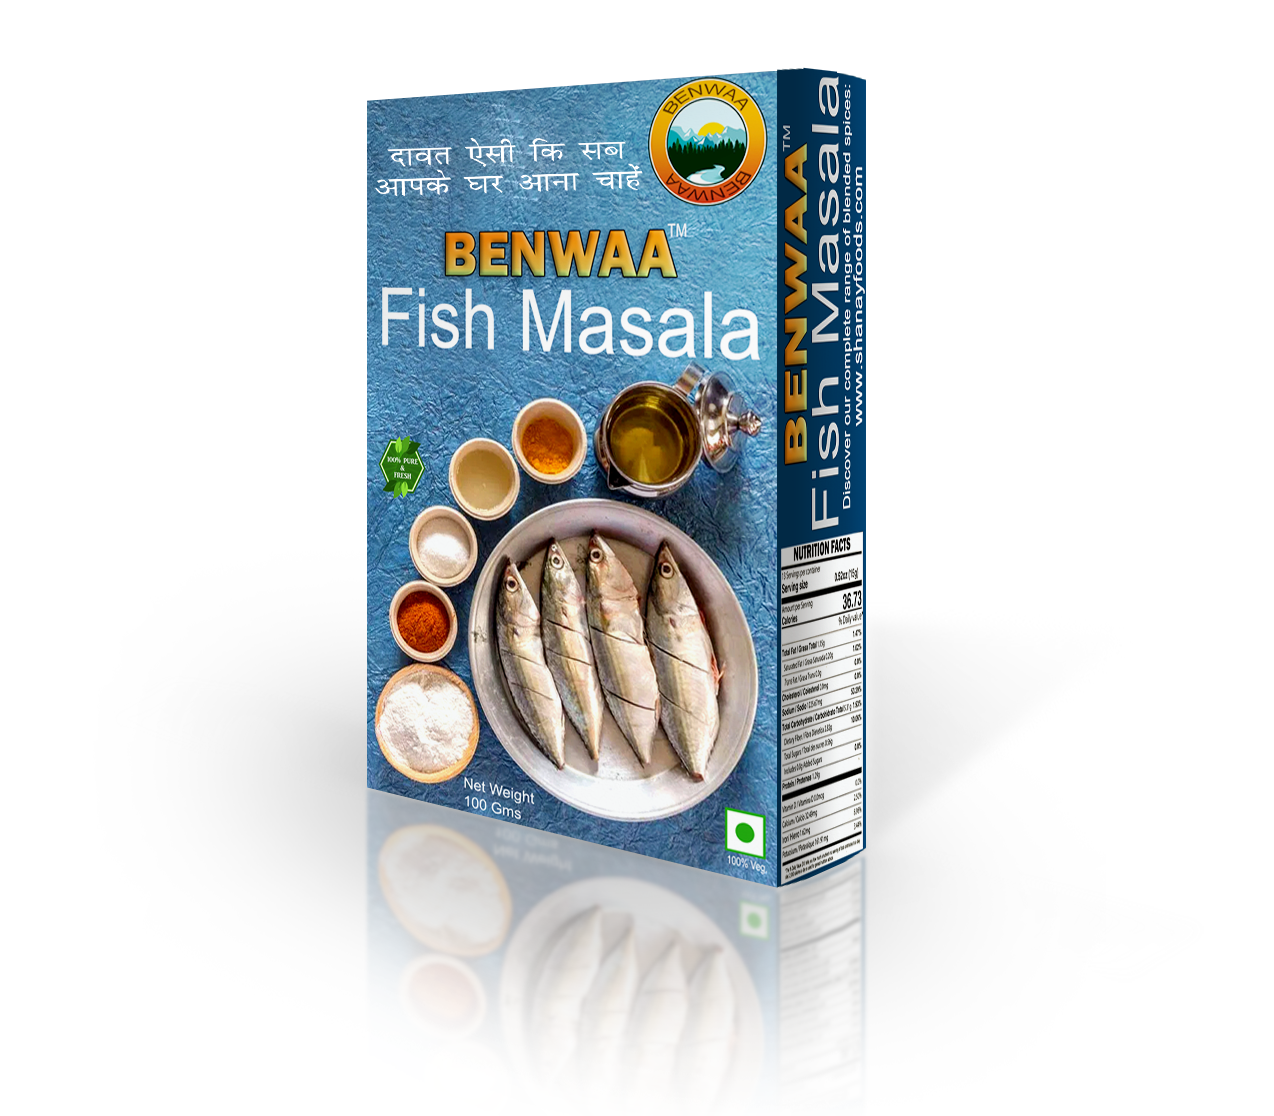 Fish masala